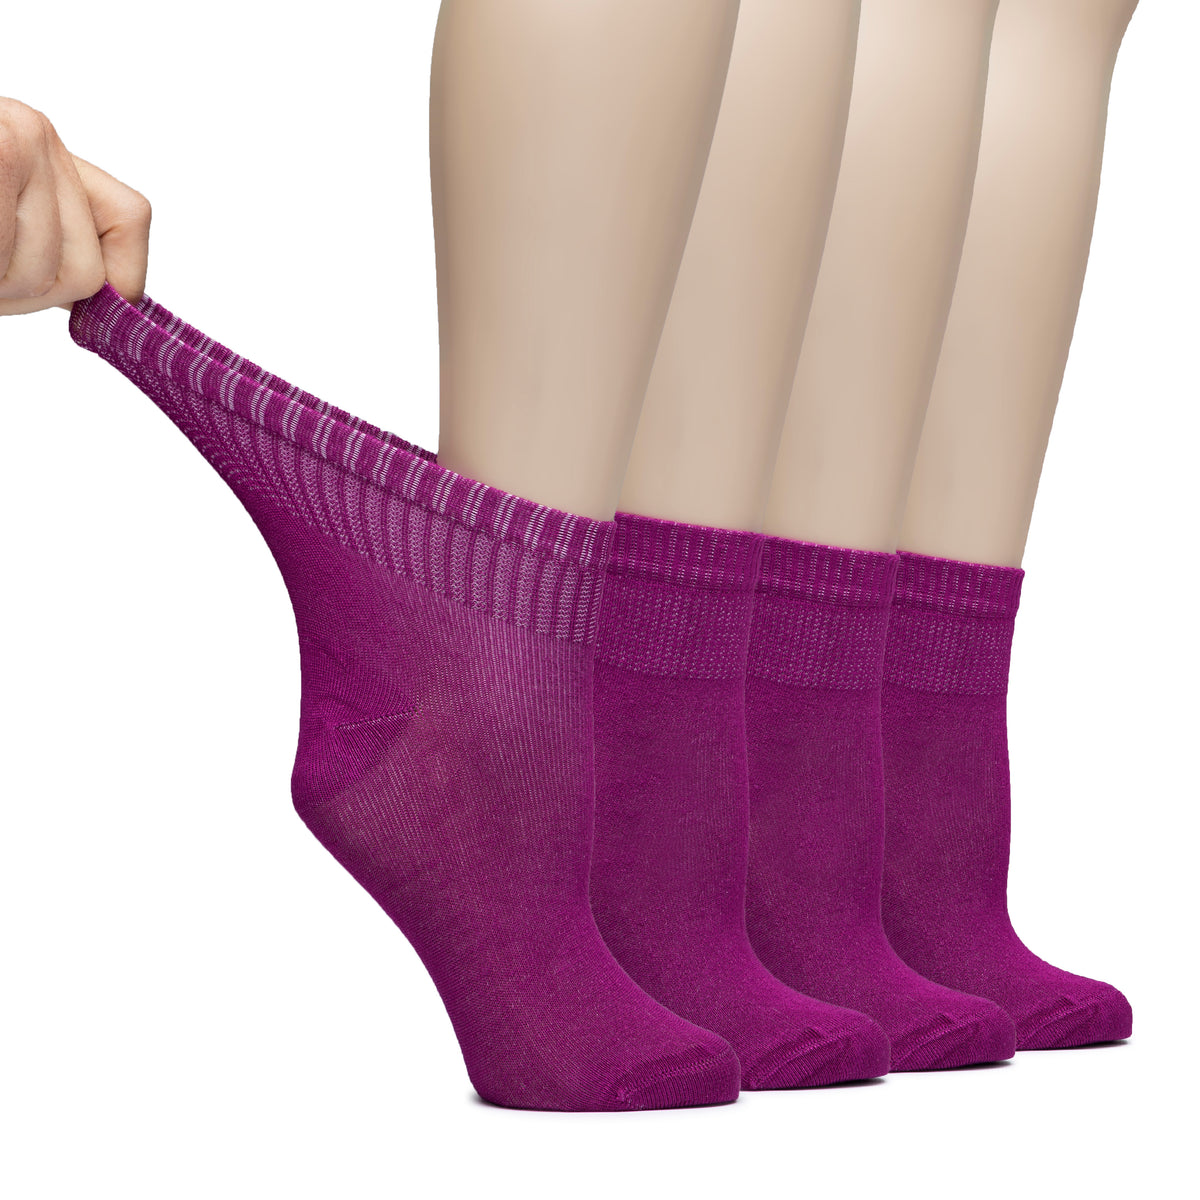 Hugh Ugoli Lightweight Women's Diabetic Ankle Socks Bamboo Thin Socks Seamless Toe and Non-Binding Top, 4 Pairs, , Shoe Size: 6-9/10-12 | Shoe Size: 10-12 | Fuchsia